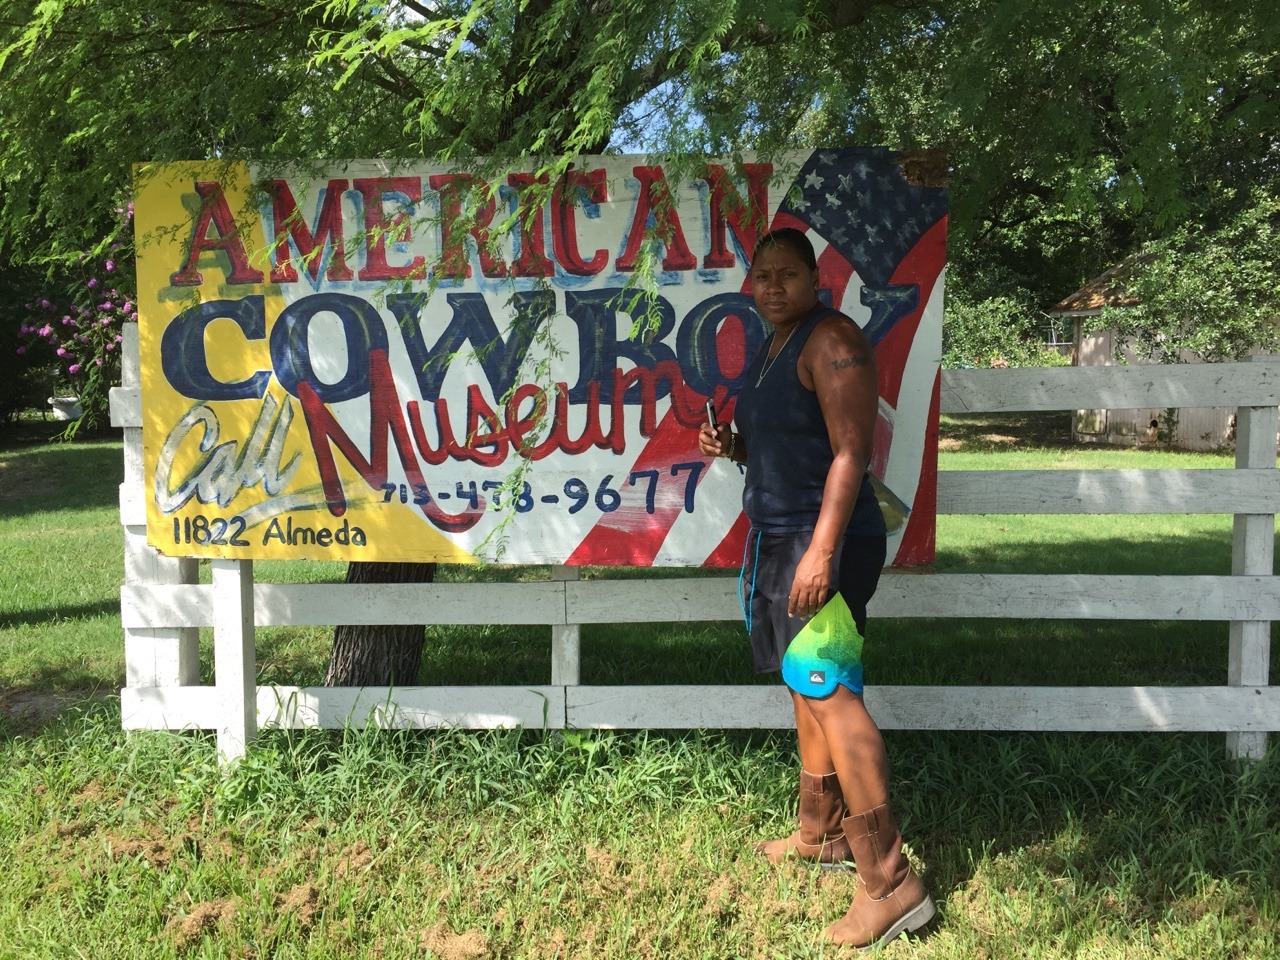 American Cowboy Museum on Almeda Rd.